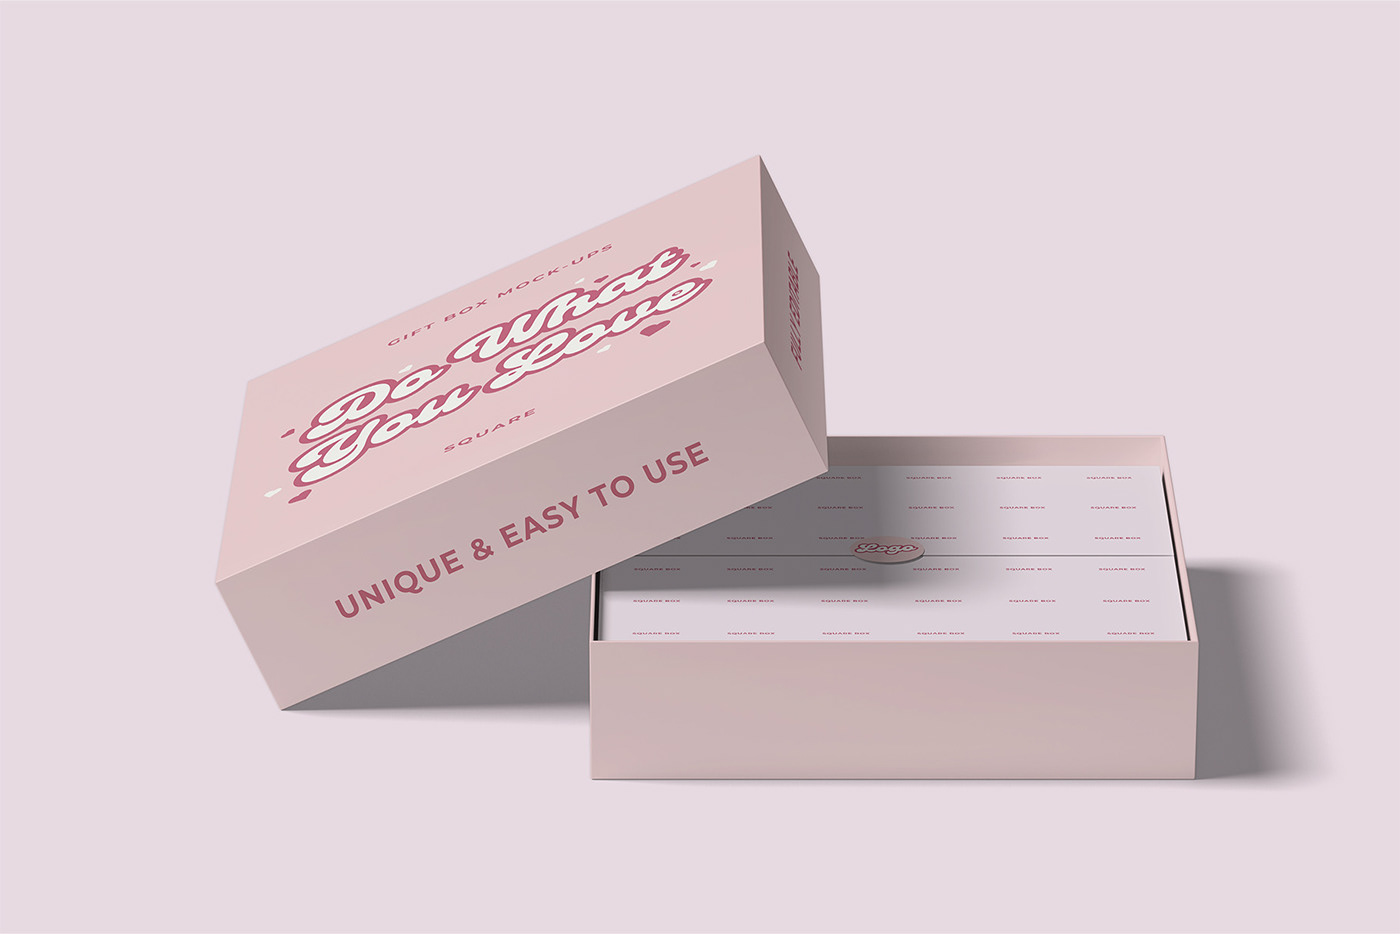 box design box packaging box Mockup mockup design mockup psd mockup free gift box shoe box packaging design